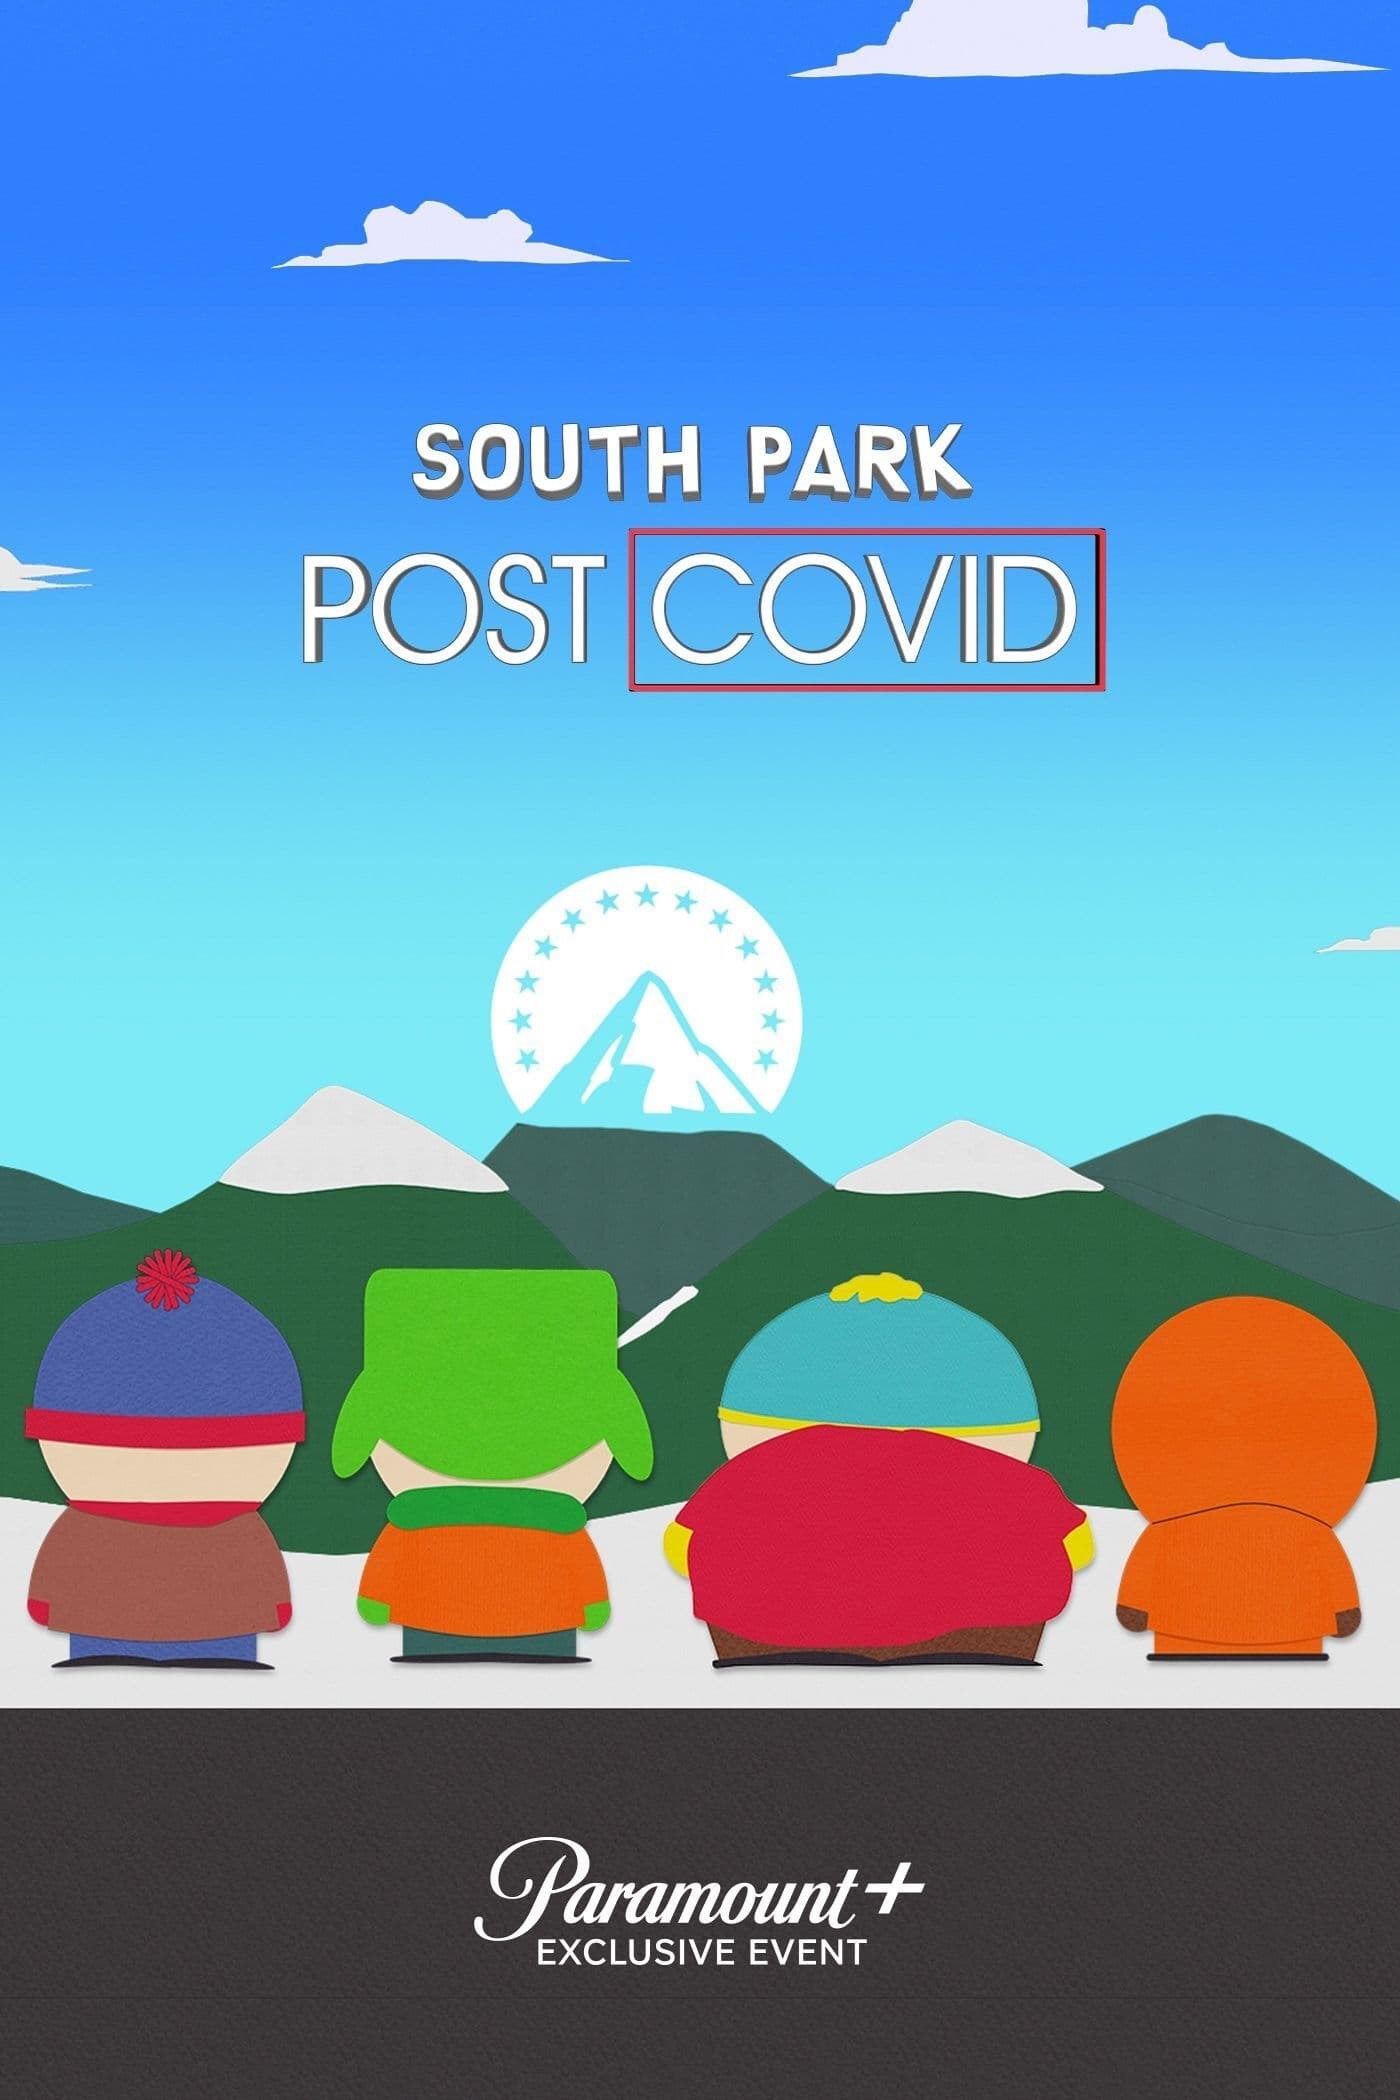 South Park: post COVID - 4K quality 2021